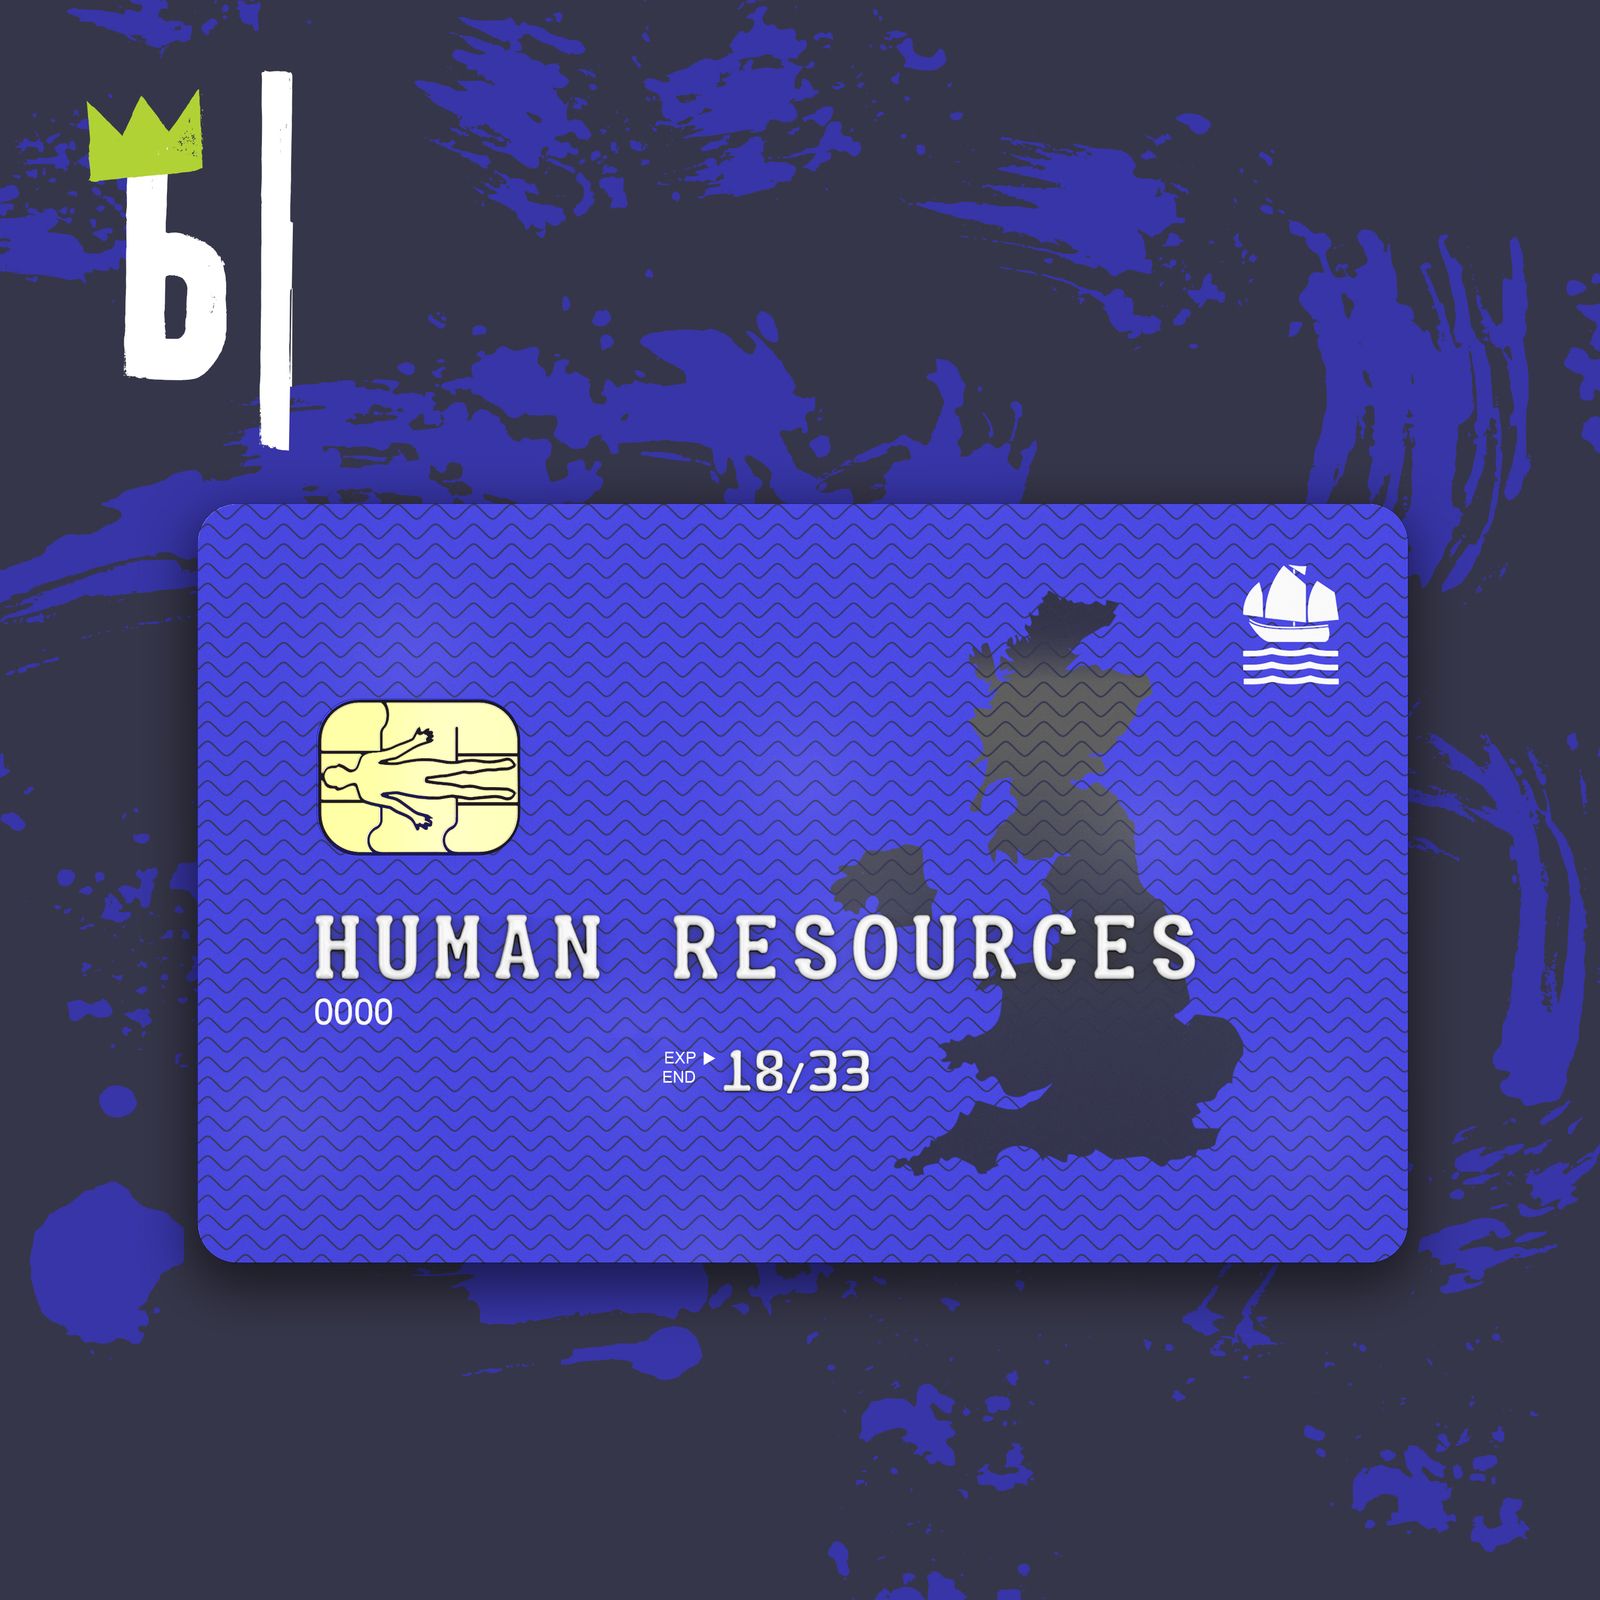 Introducing Human Resources